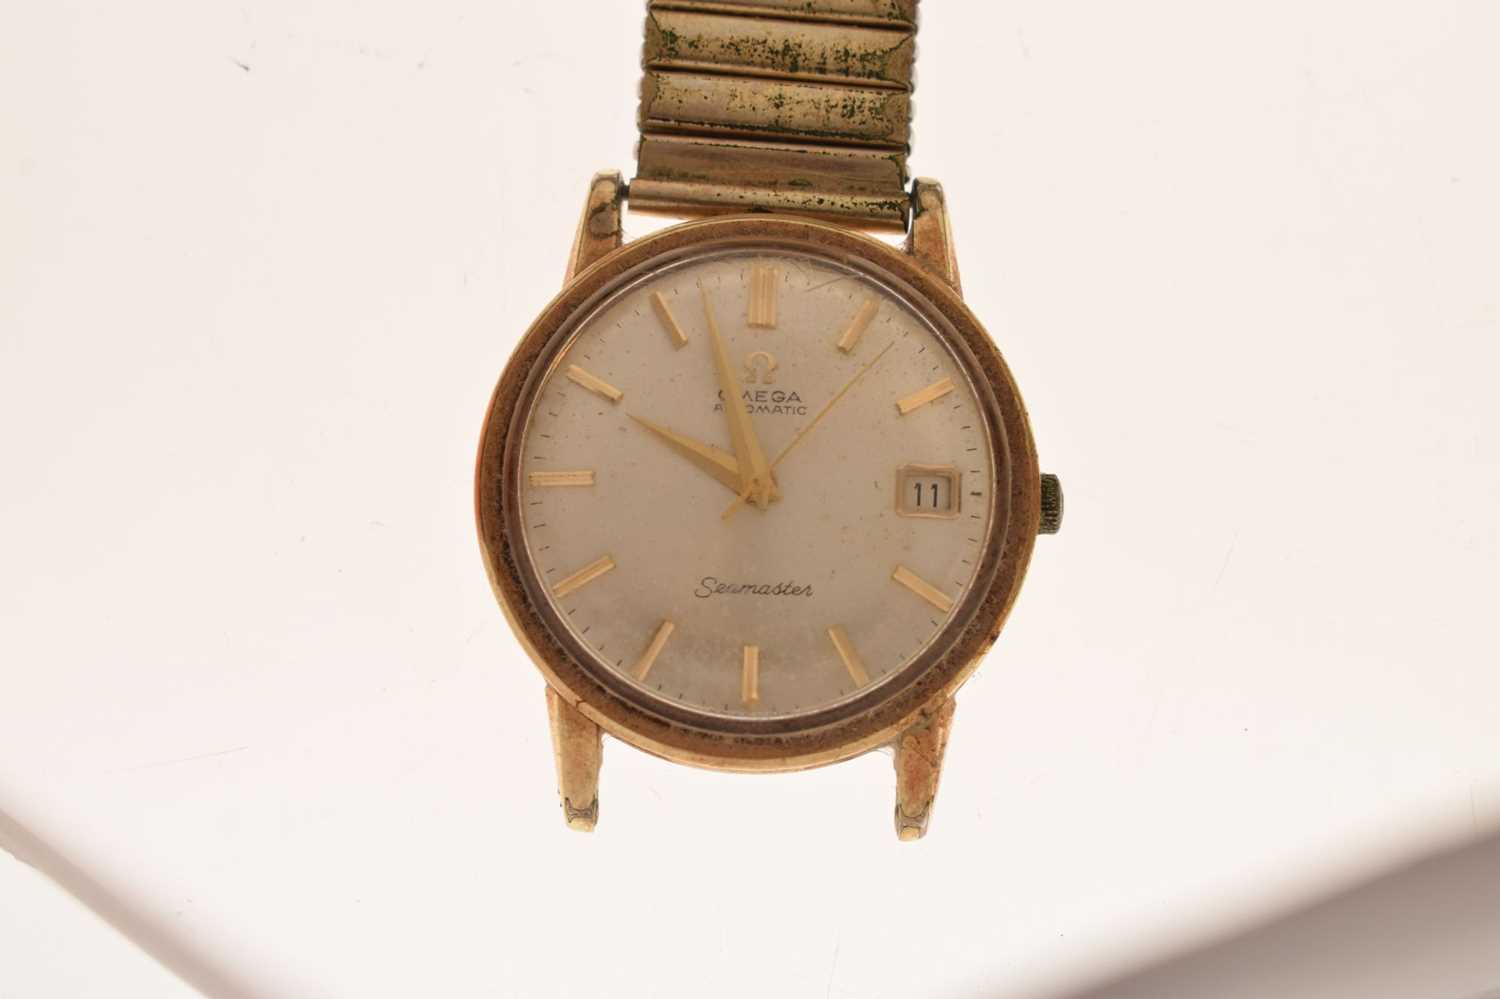 Omega - Gentleman's Seamaster gold plated bracelet watch - Image 8 of 8